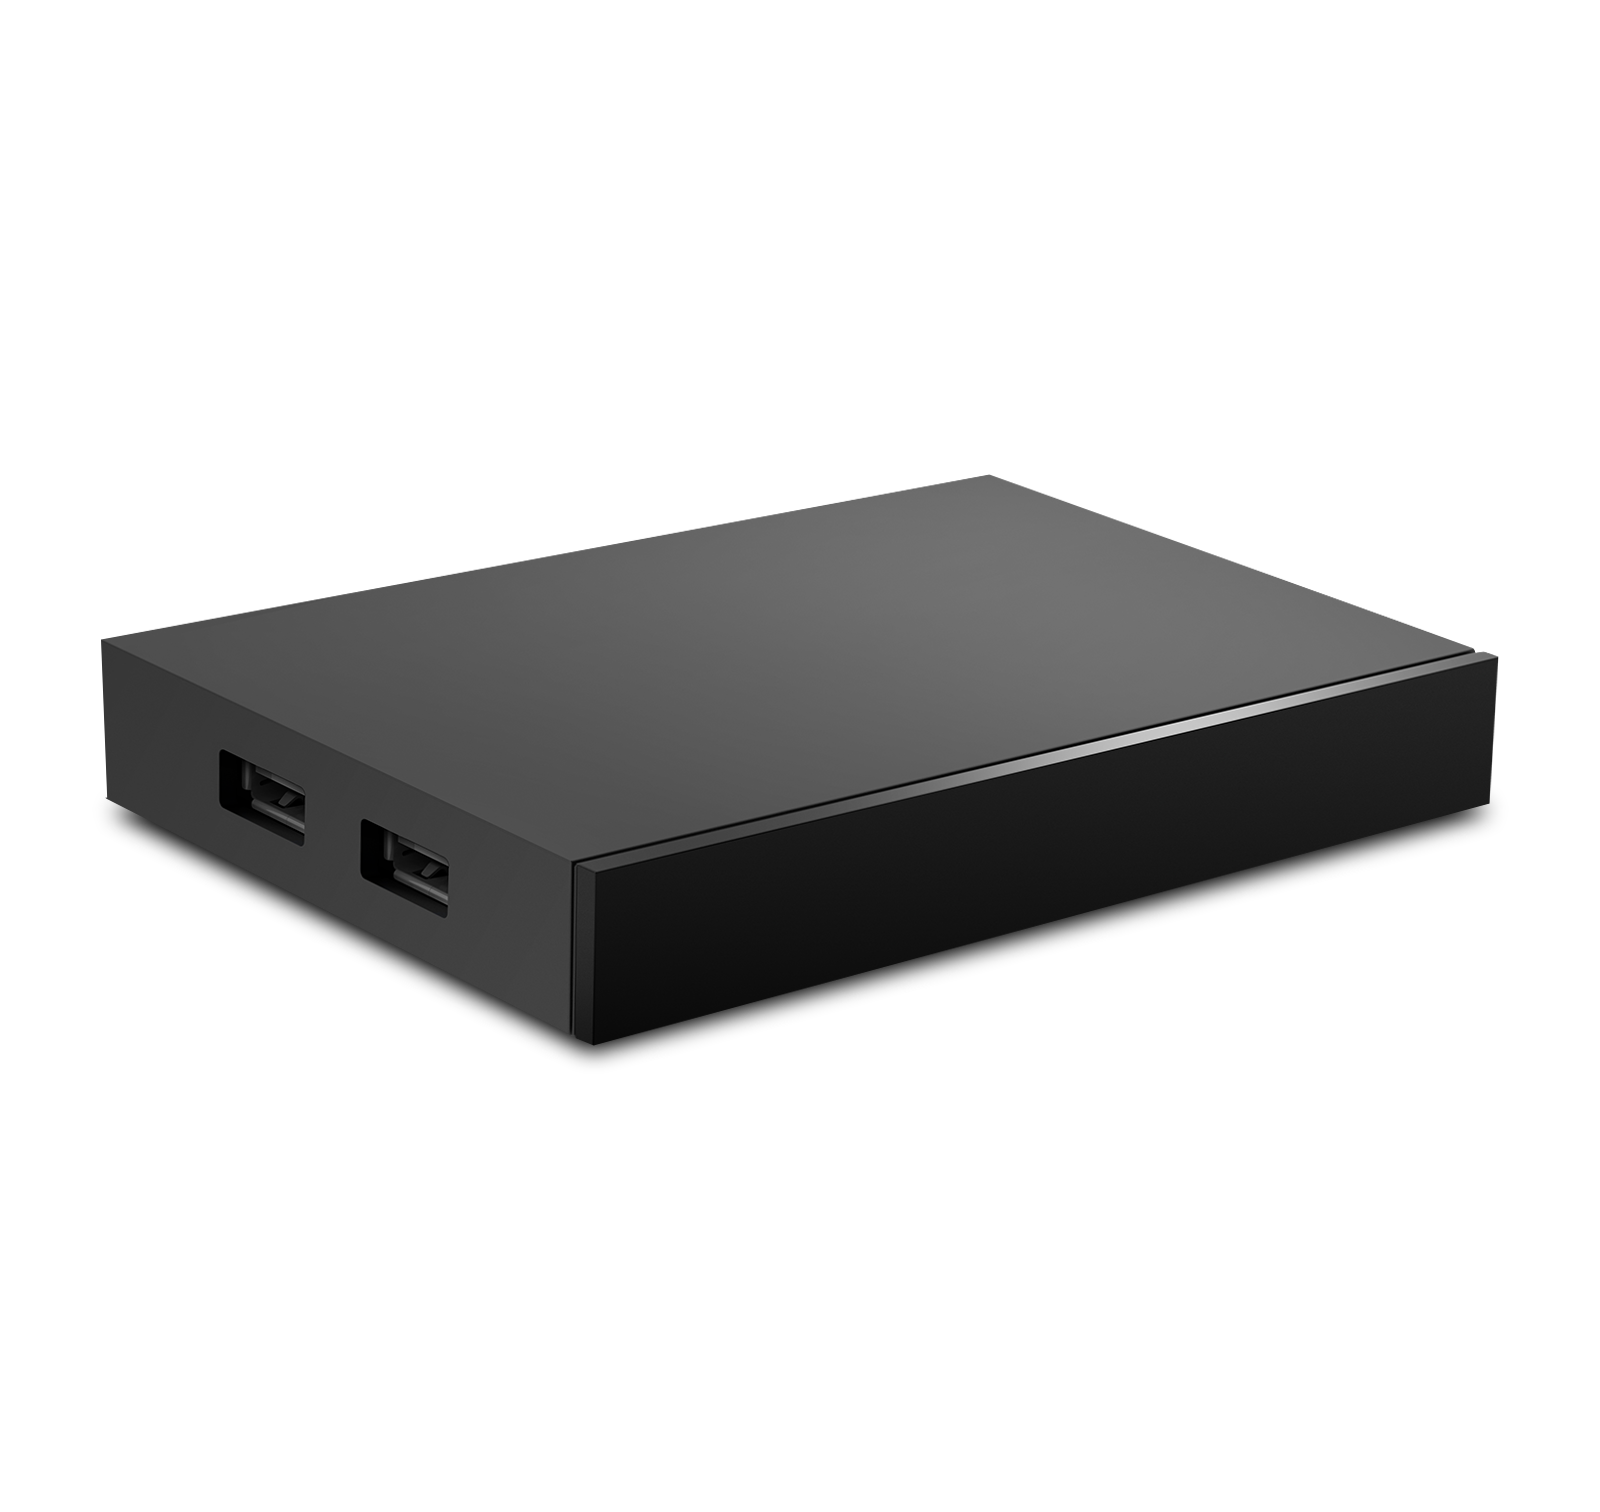 MAG 540 UHD 4K Linux IP-Receiver (LAN, HDMI, USB, Dolby Digital+, IP-Mediaplayer, Schwarz)